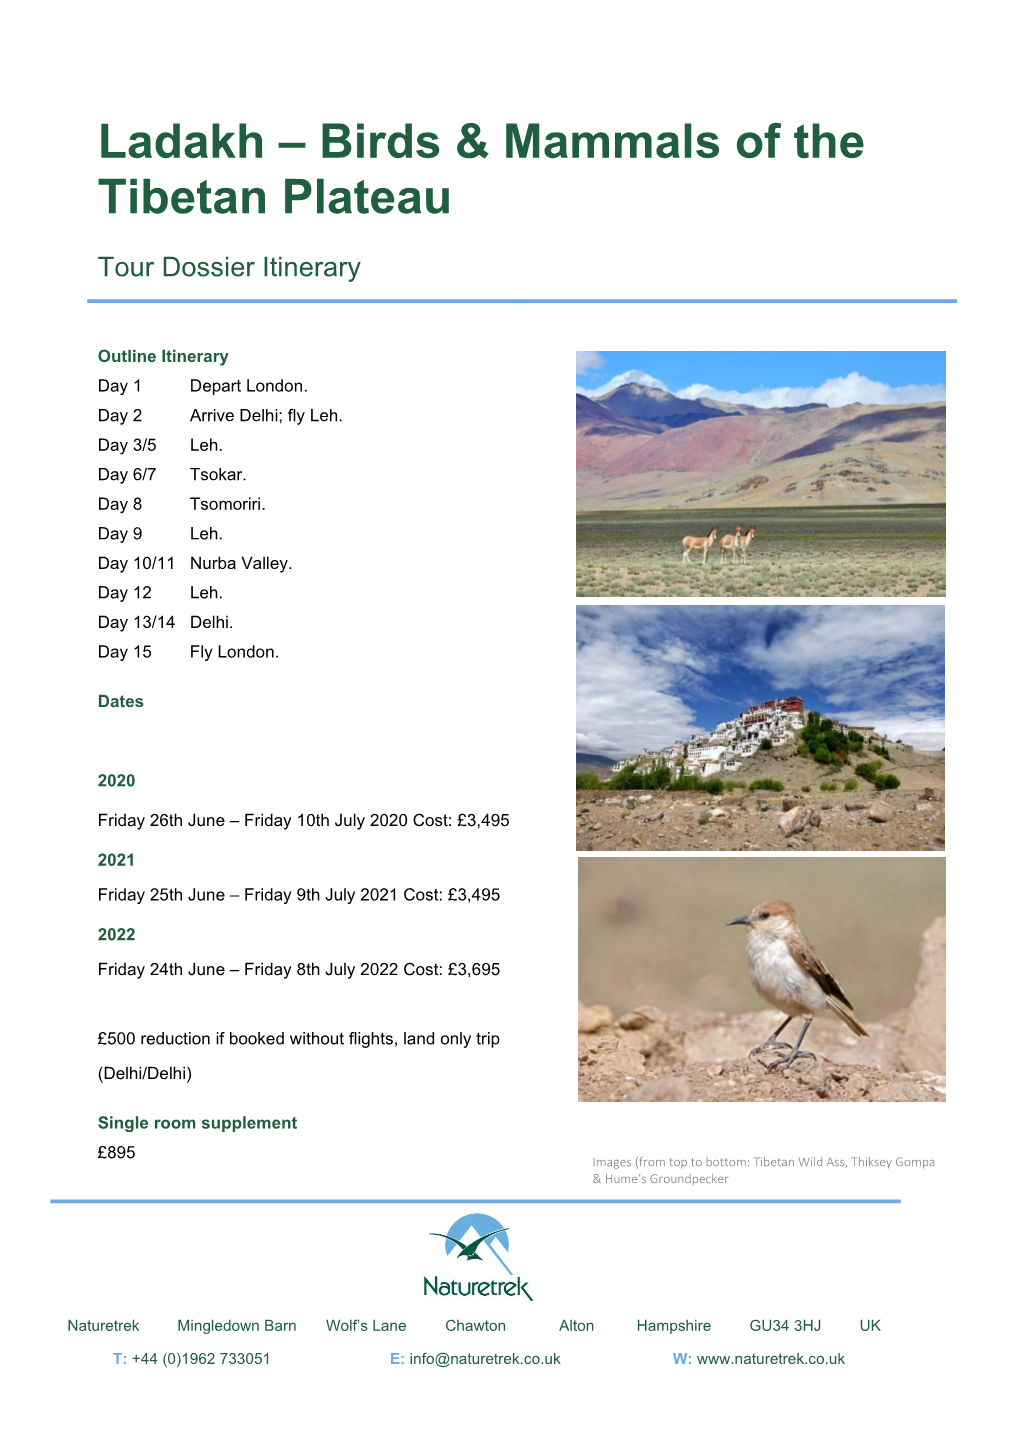 Ladakh – Birds & Mammals of the Tibetan Plateau